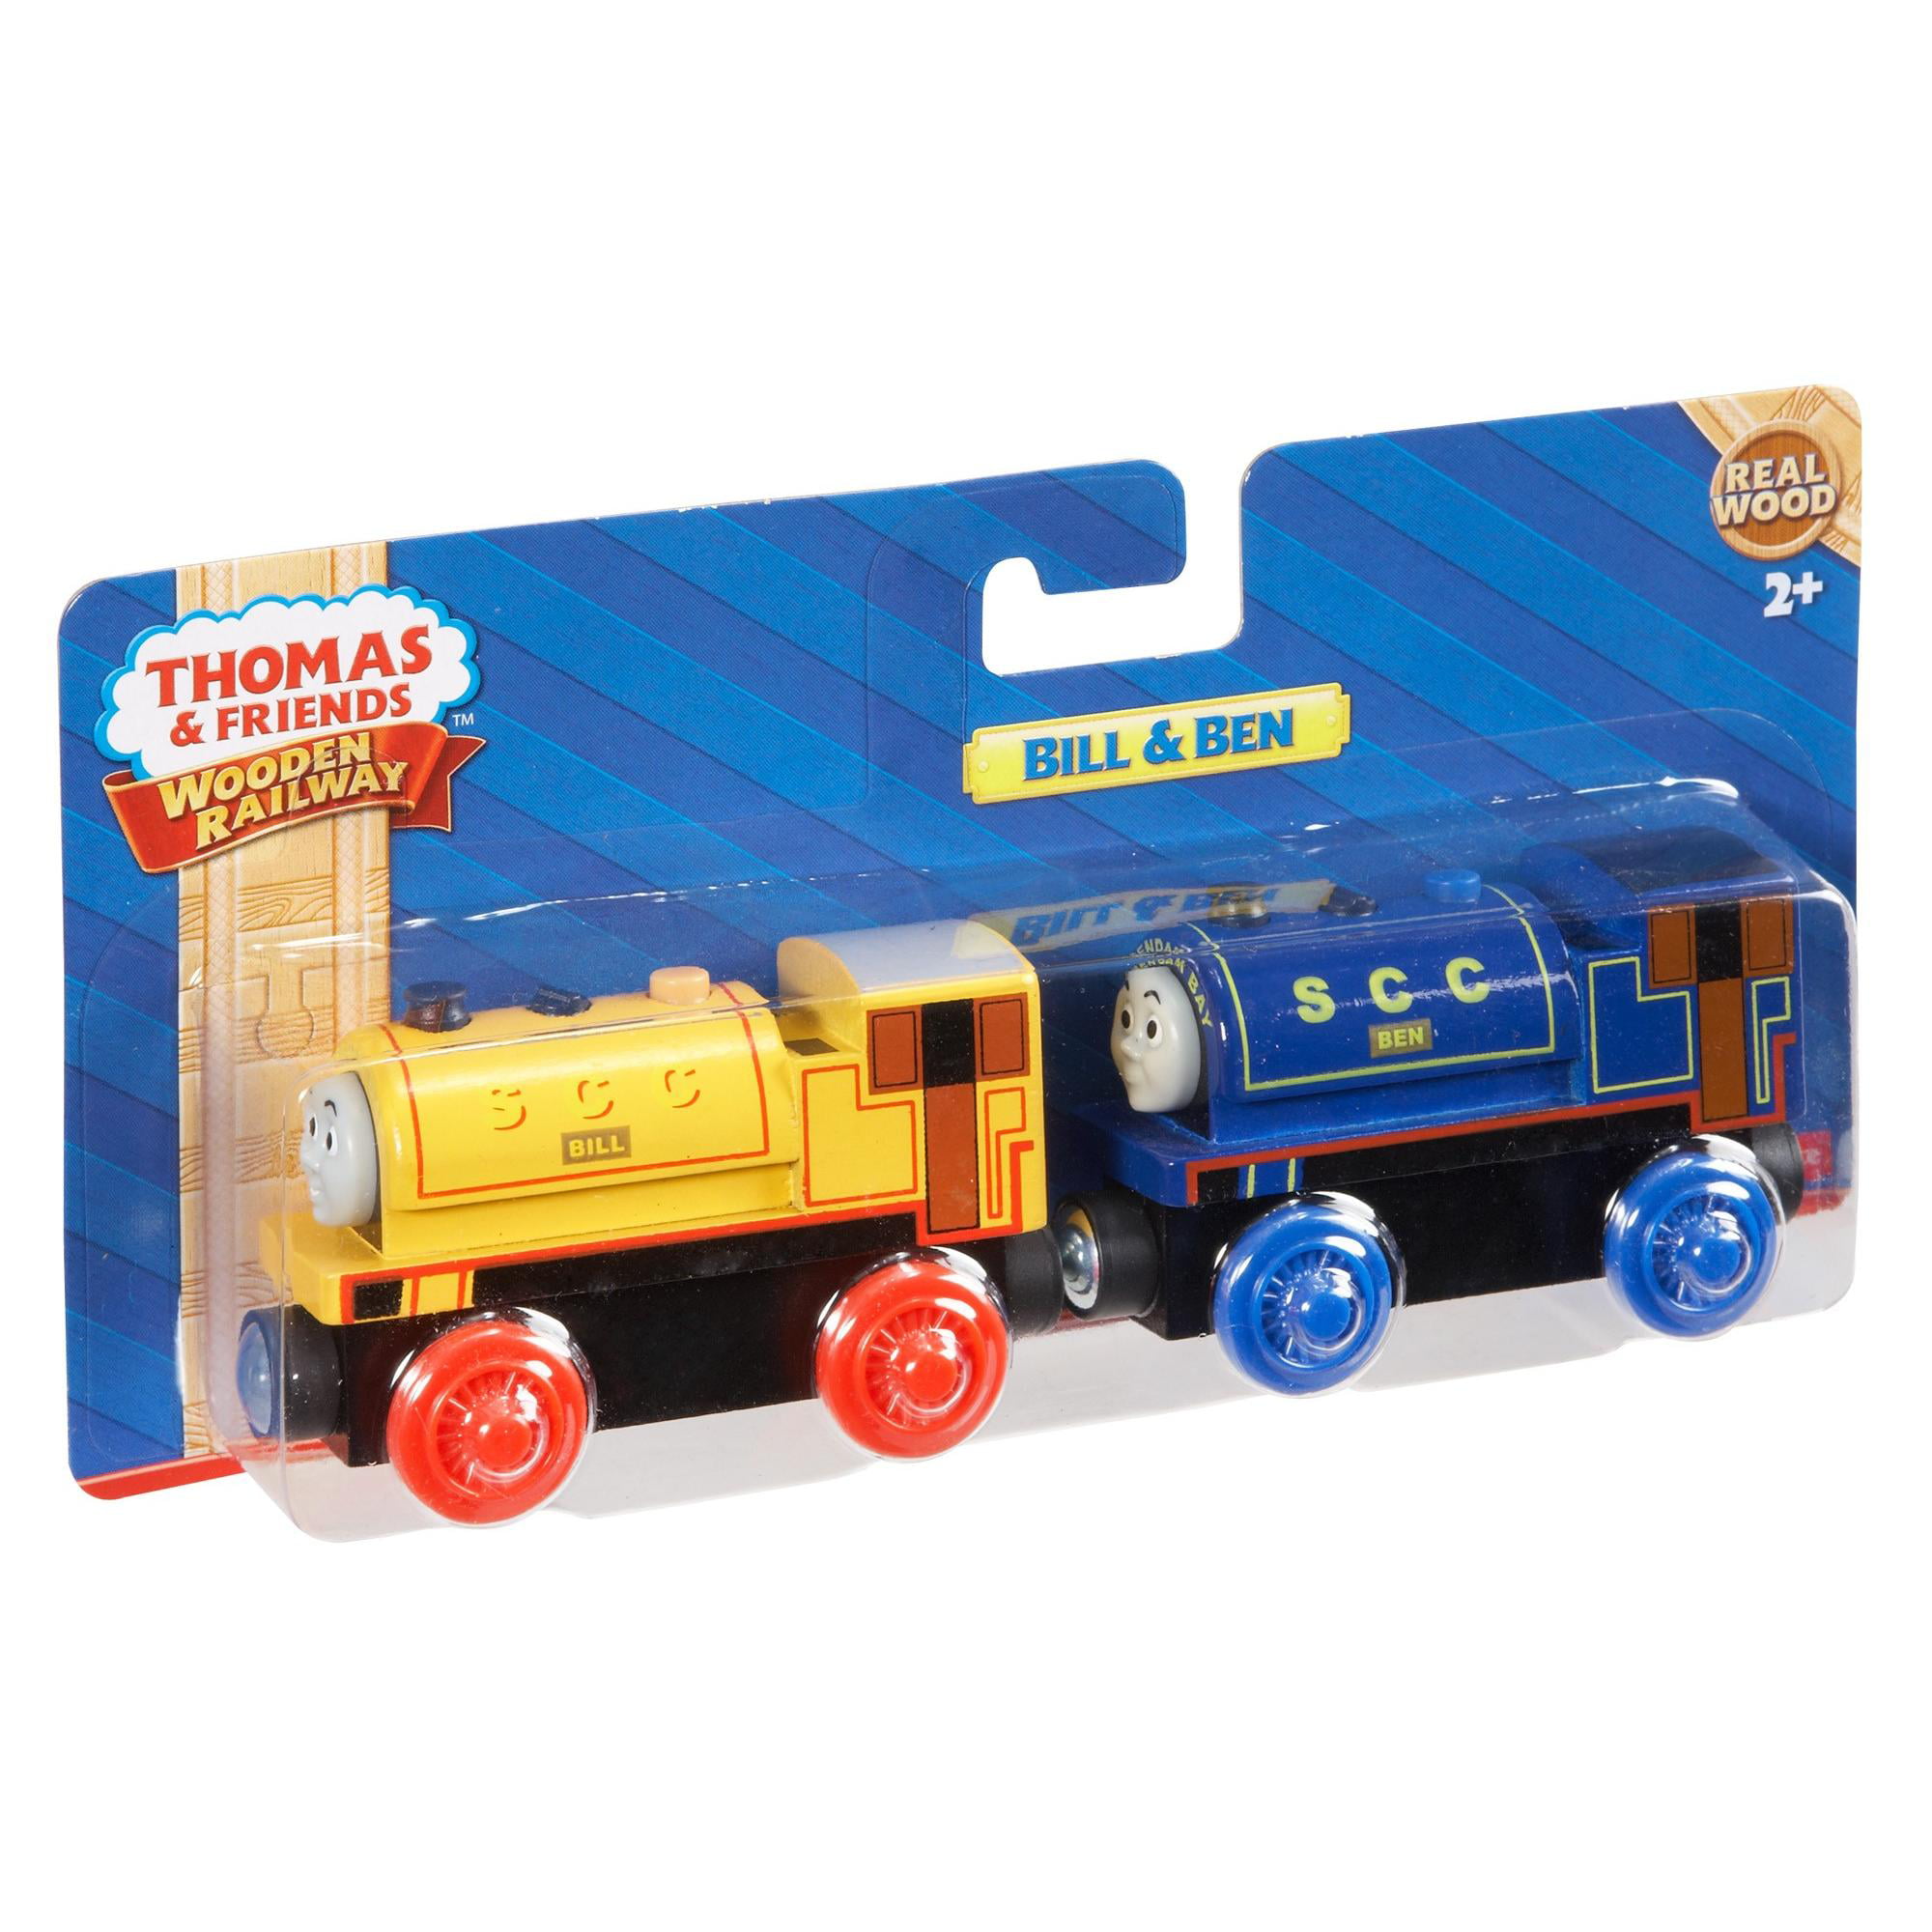 Thomas & Friends Wooden Railway Bill & Ben - Walmart.Com